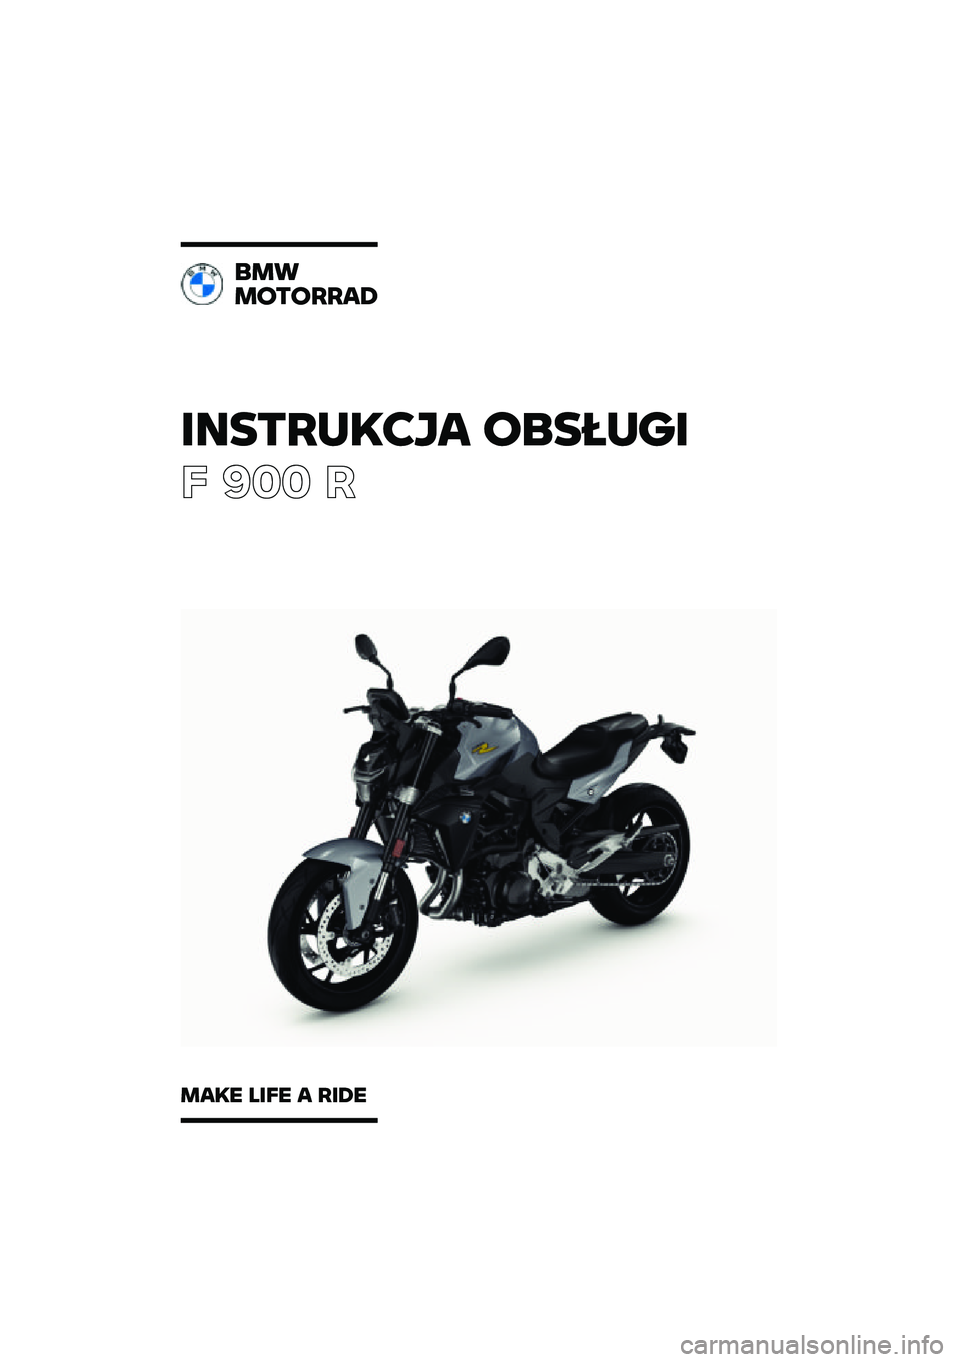 BMW MOTORRAD F 900 R 2021  Instrukcja obsługi (in Polish) �������\b�	�
� �\f�
�����
� ��� �
�
��
��\f��\f����
���\b� ���� � ���� 